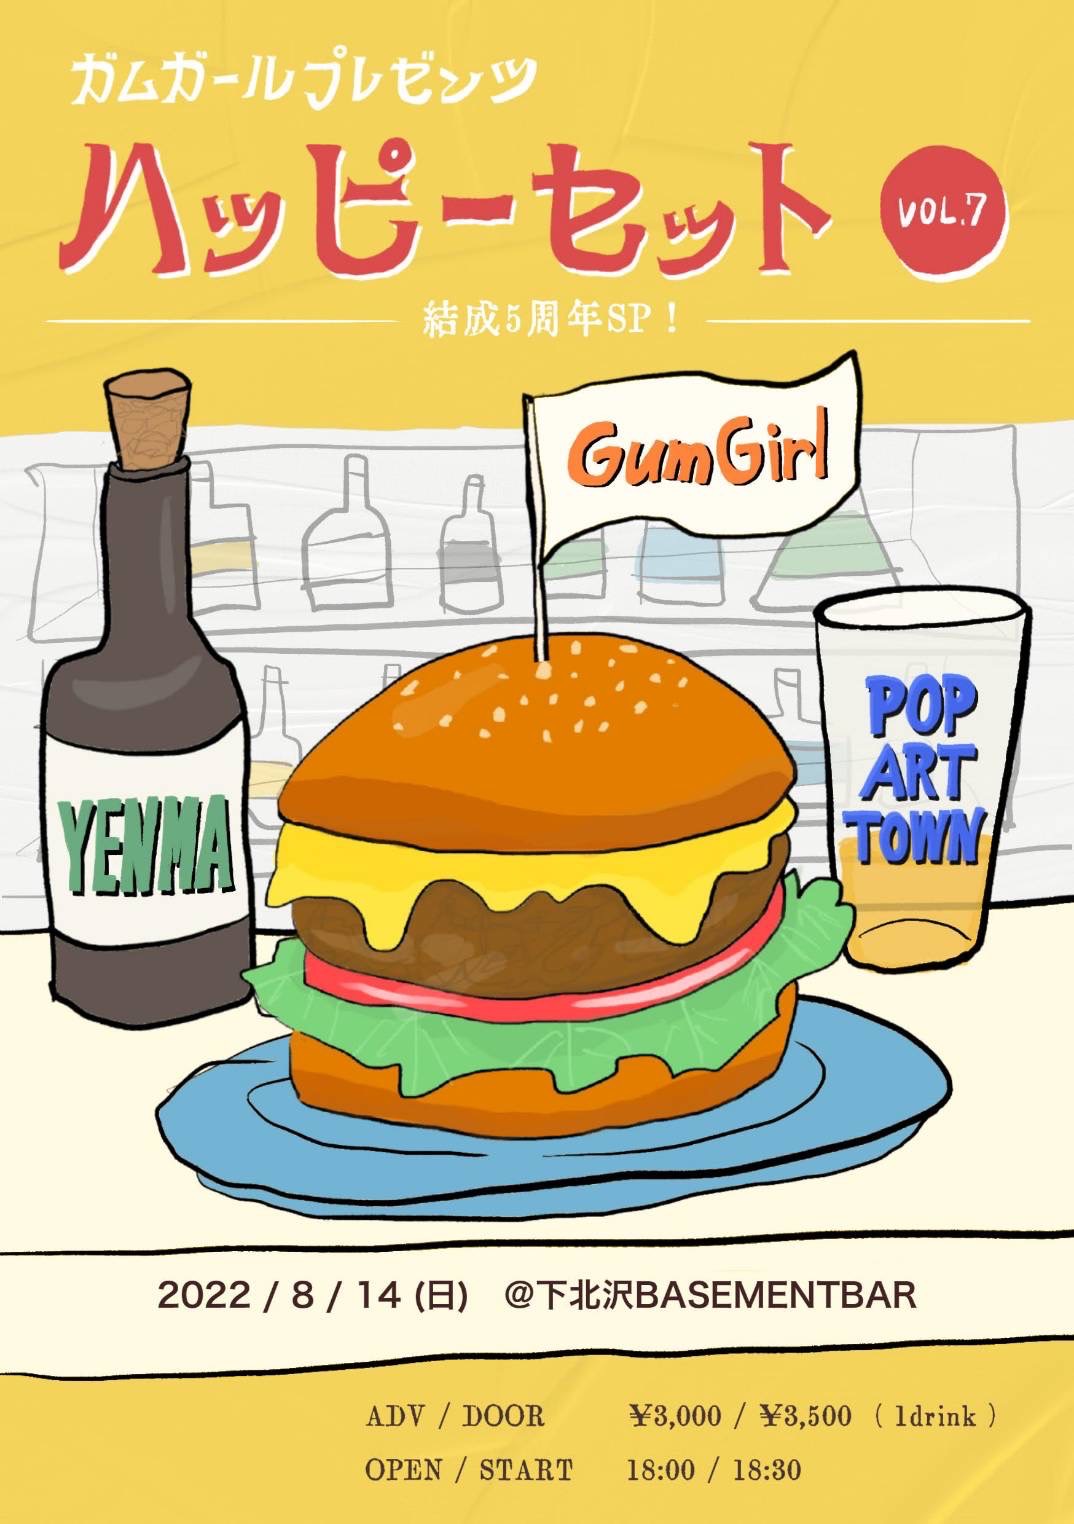 Gum Girl presents 「ハッピーセットvol.7〜結成5周年SP〜」